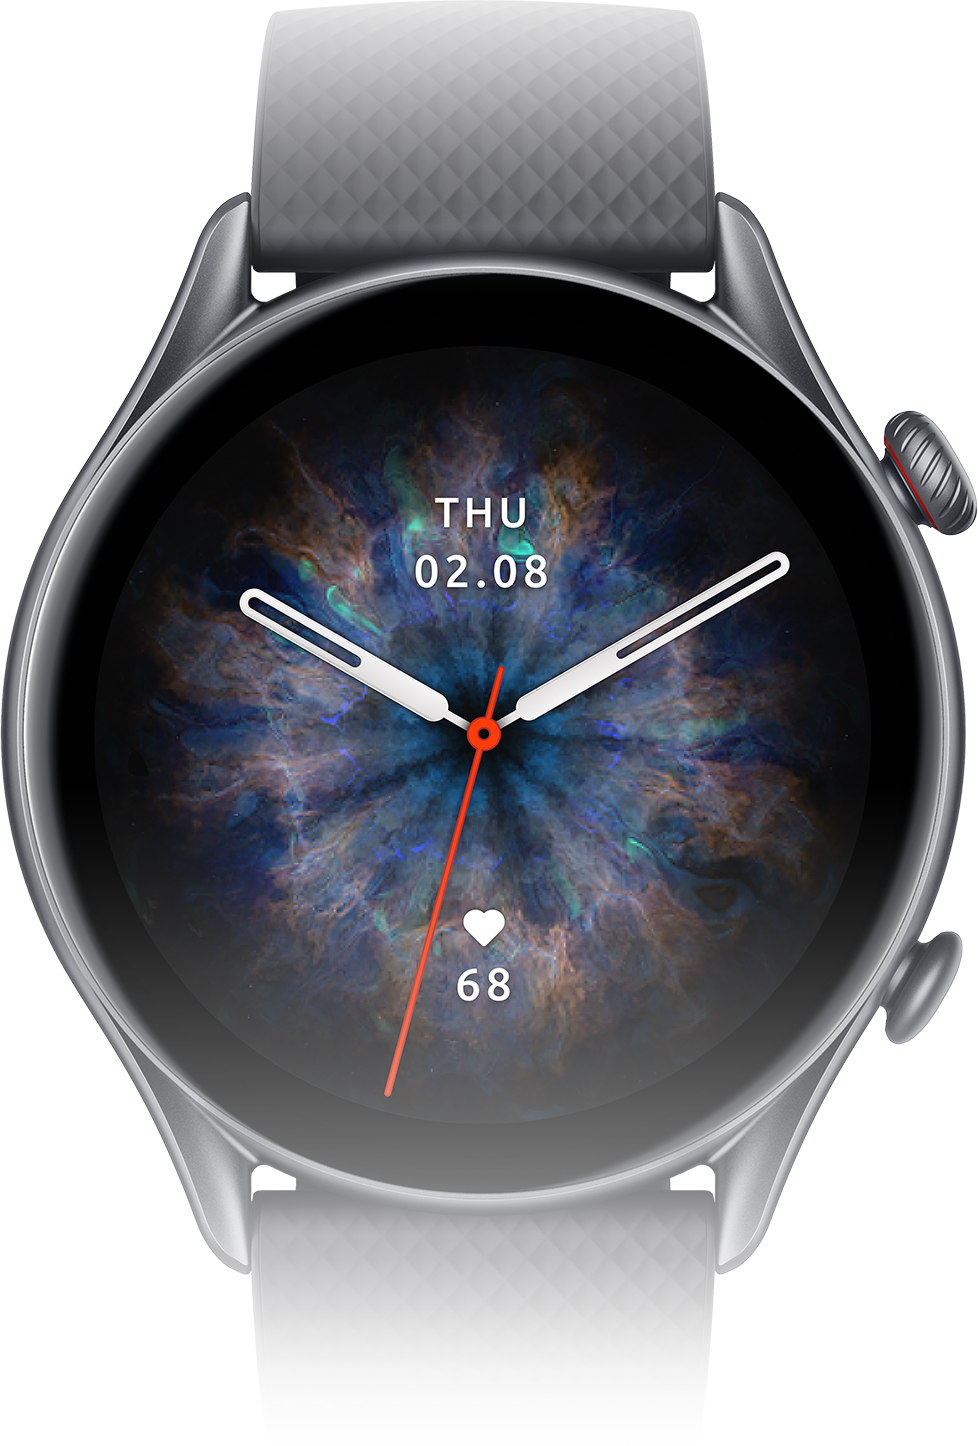 Reloj Inteligente Smartwatch Amazfit Gtr 3 Pro Marron Pantalla